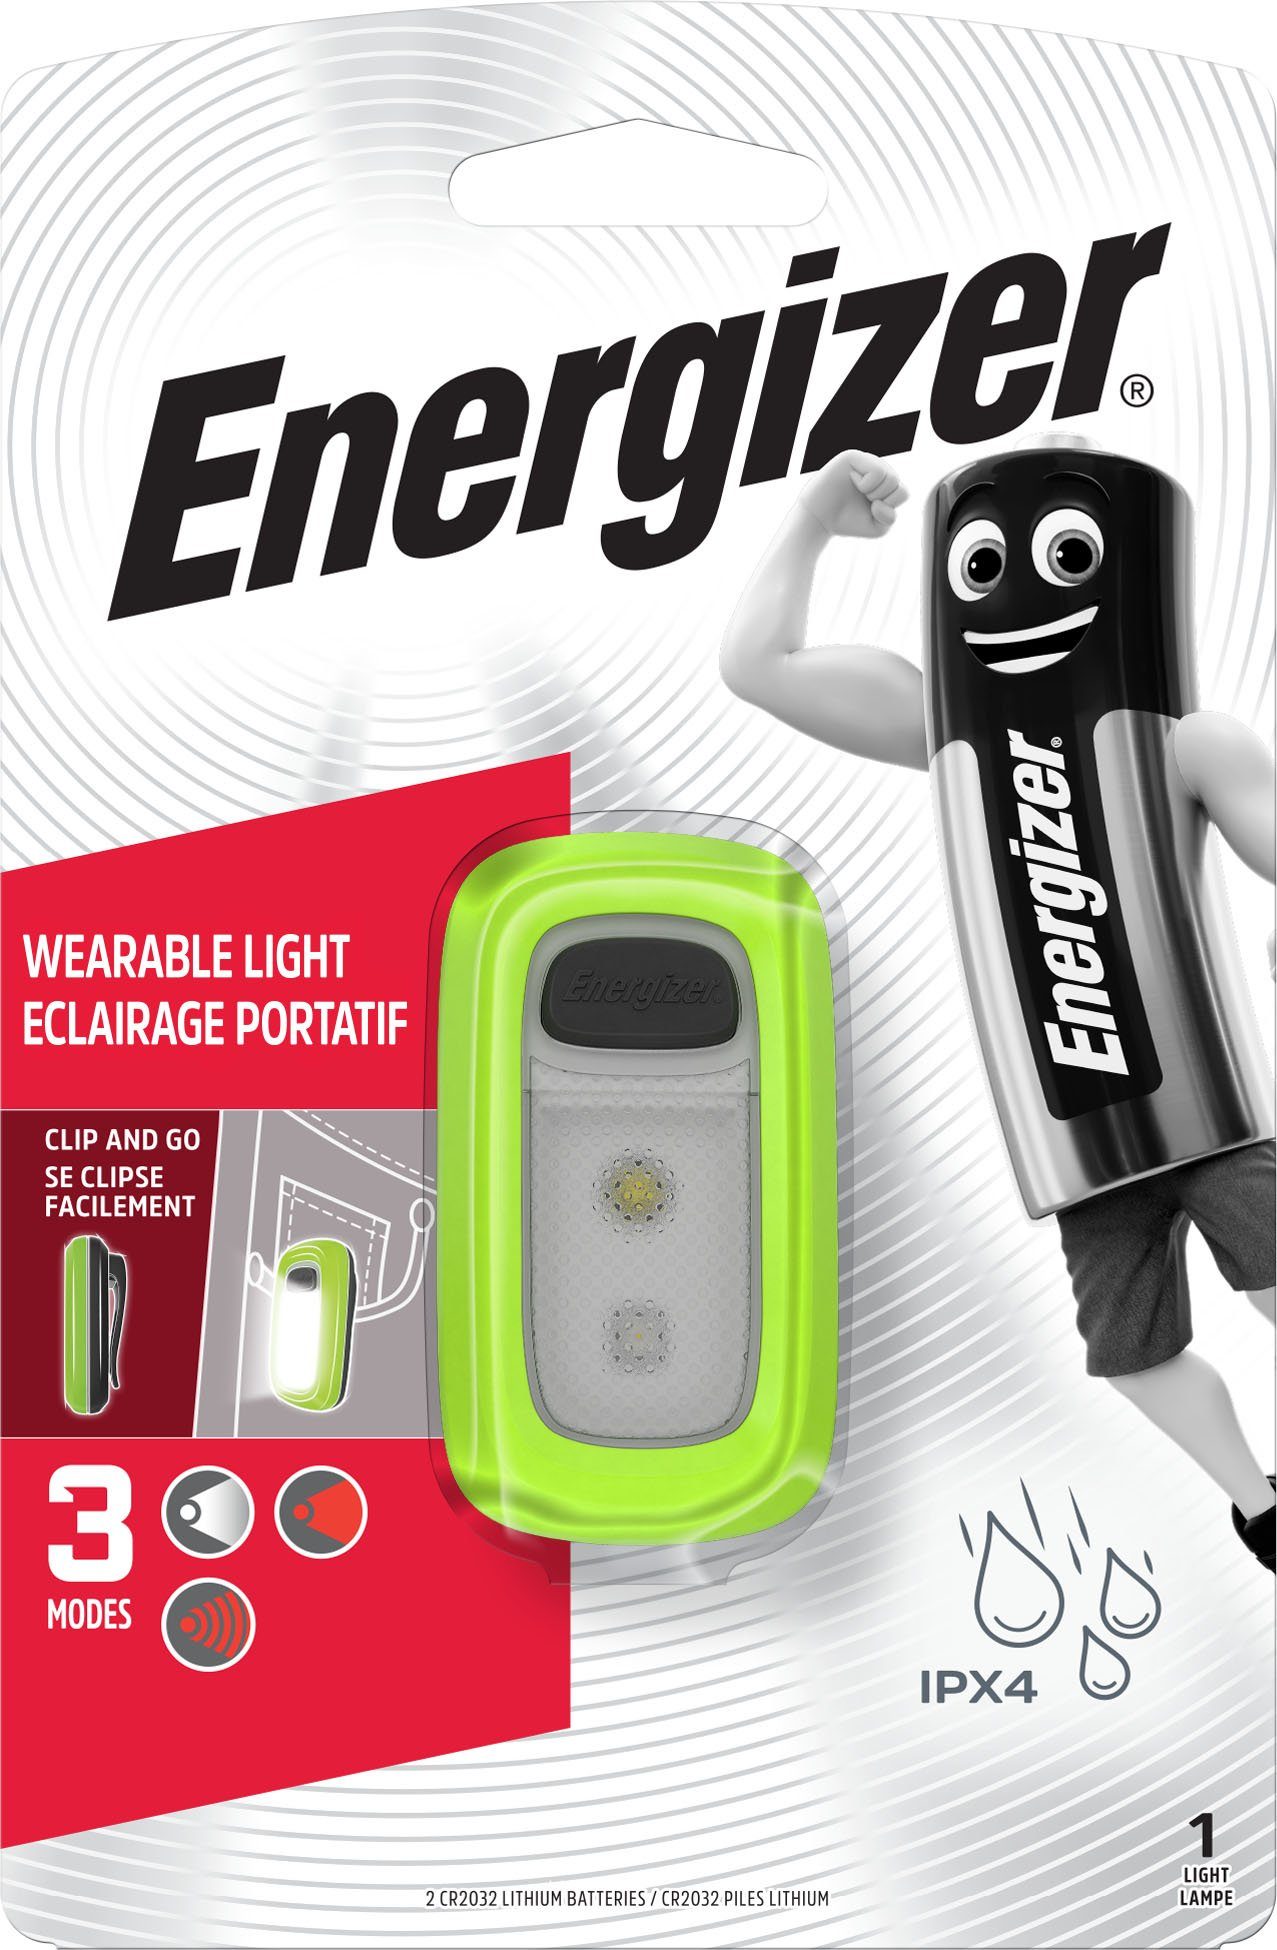 Energizer Klemmleuchte Wearable Clip Light, und fest dank Design integriert, leichtem LED Bedienkomfort kompaktem